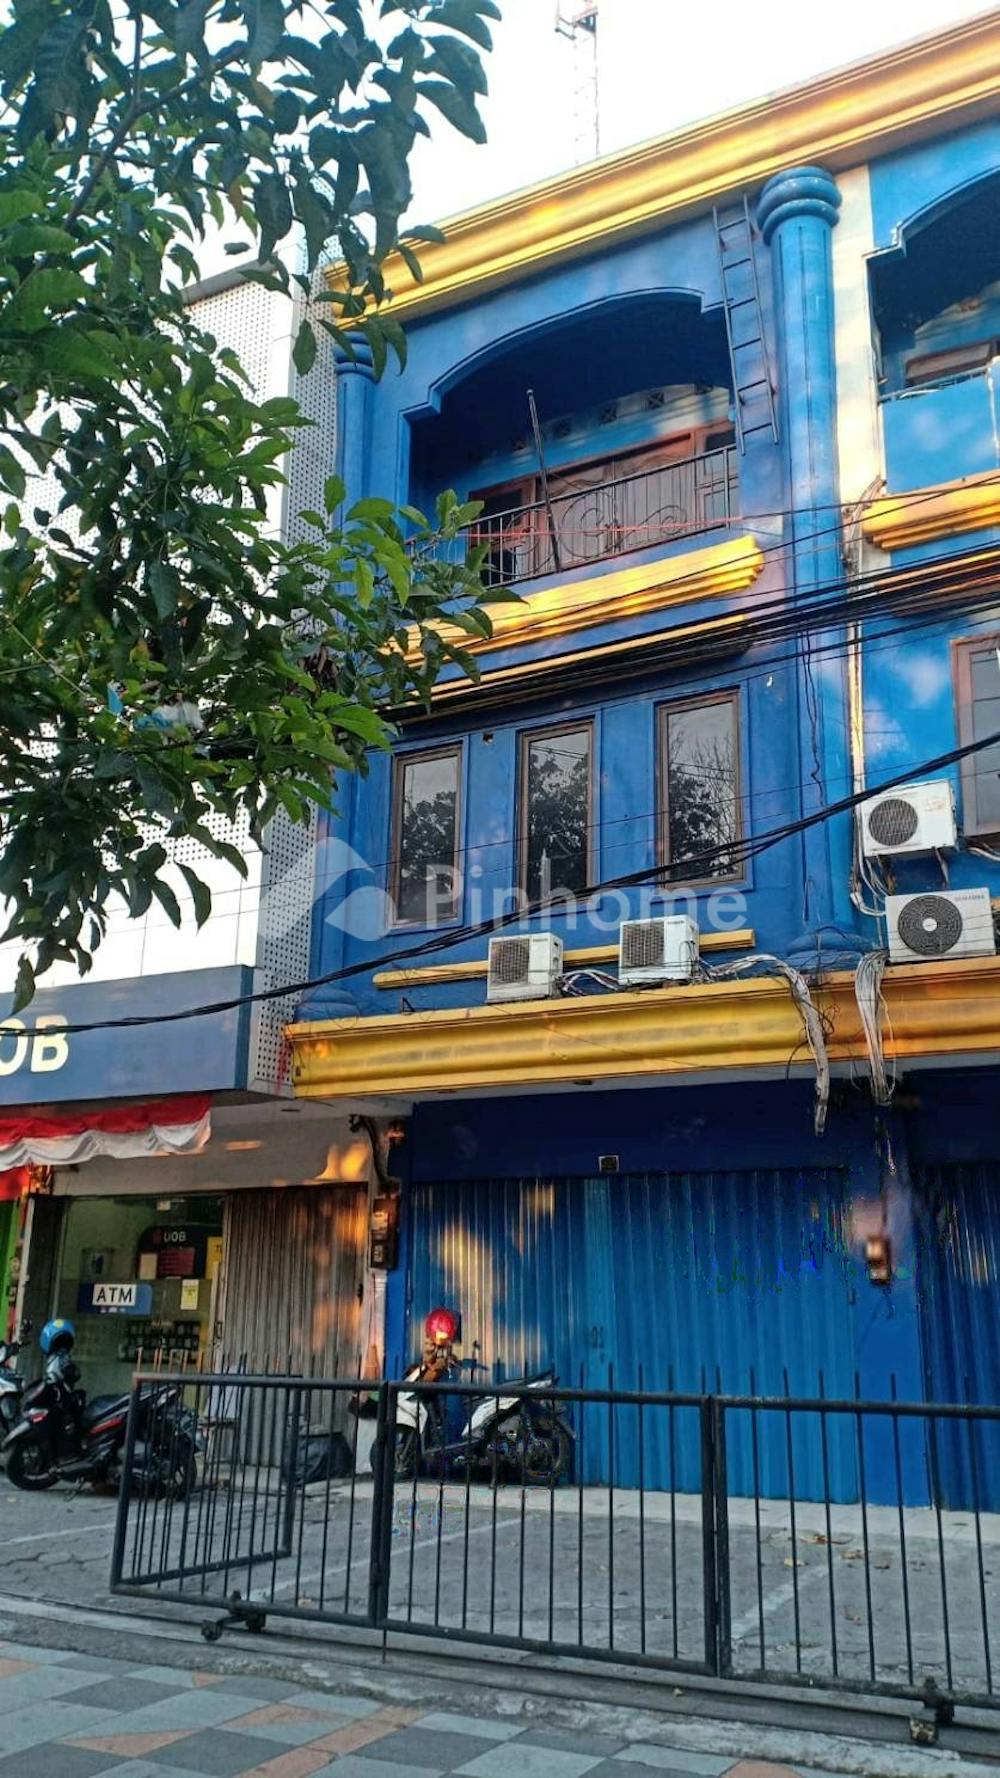 Disewakan Rumah Toko 3 Lantai Hadap Jalan Raya di Jl. Perak Timur , Surabaya Utara Rp80 Juta/bulan | Pinhome